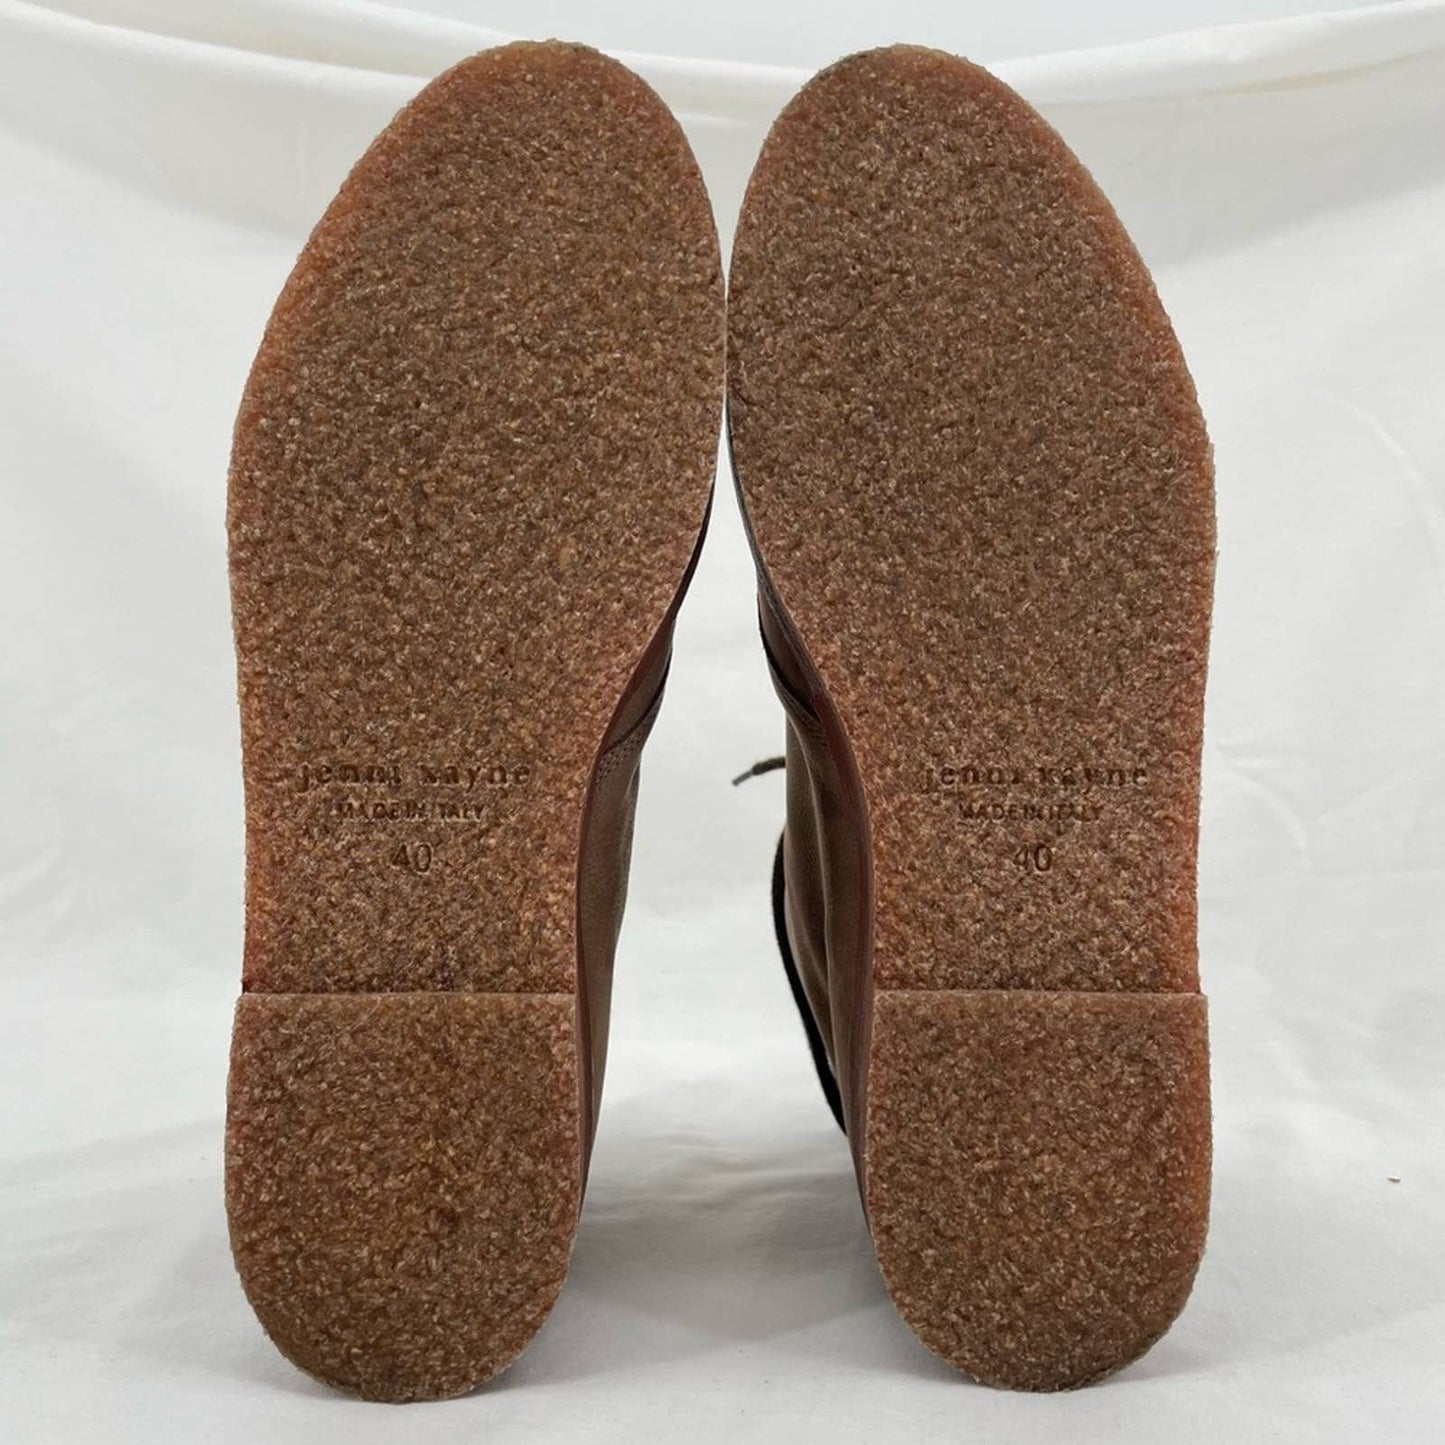 Jenni Kayne Canyon Boot Oiled Leather Nubuck Stone Retro Hiking Vibes Neutral Size EU 40